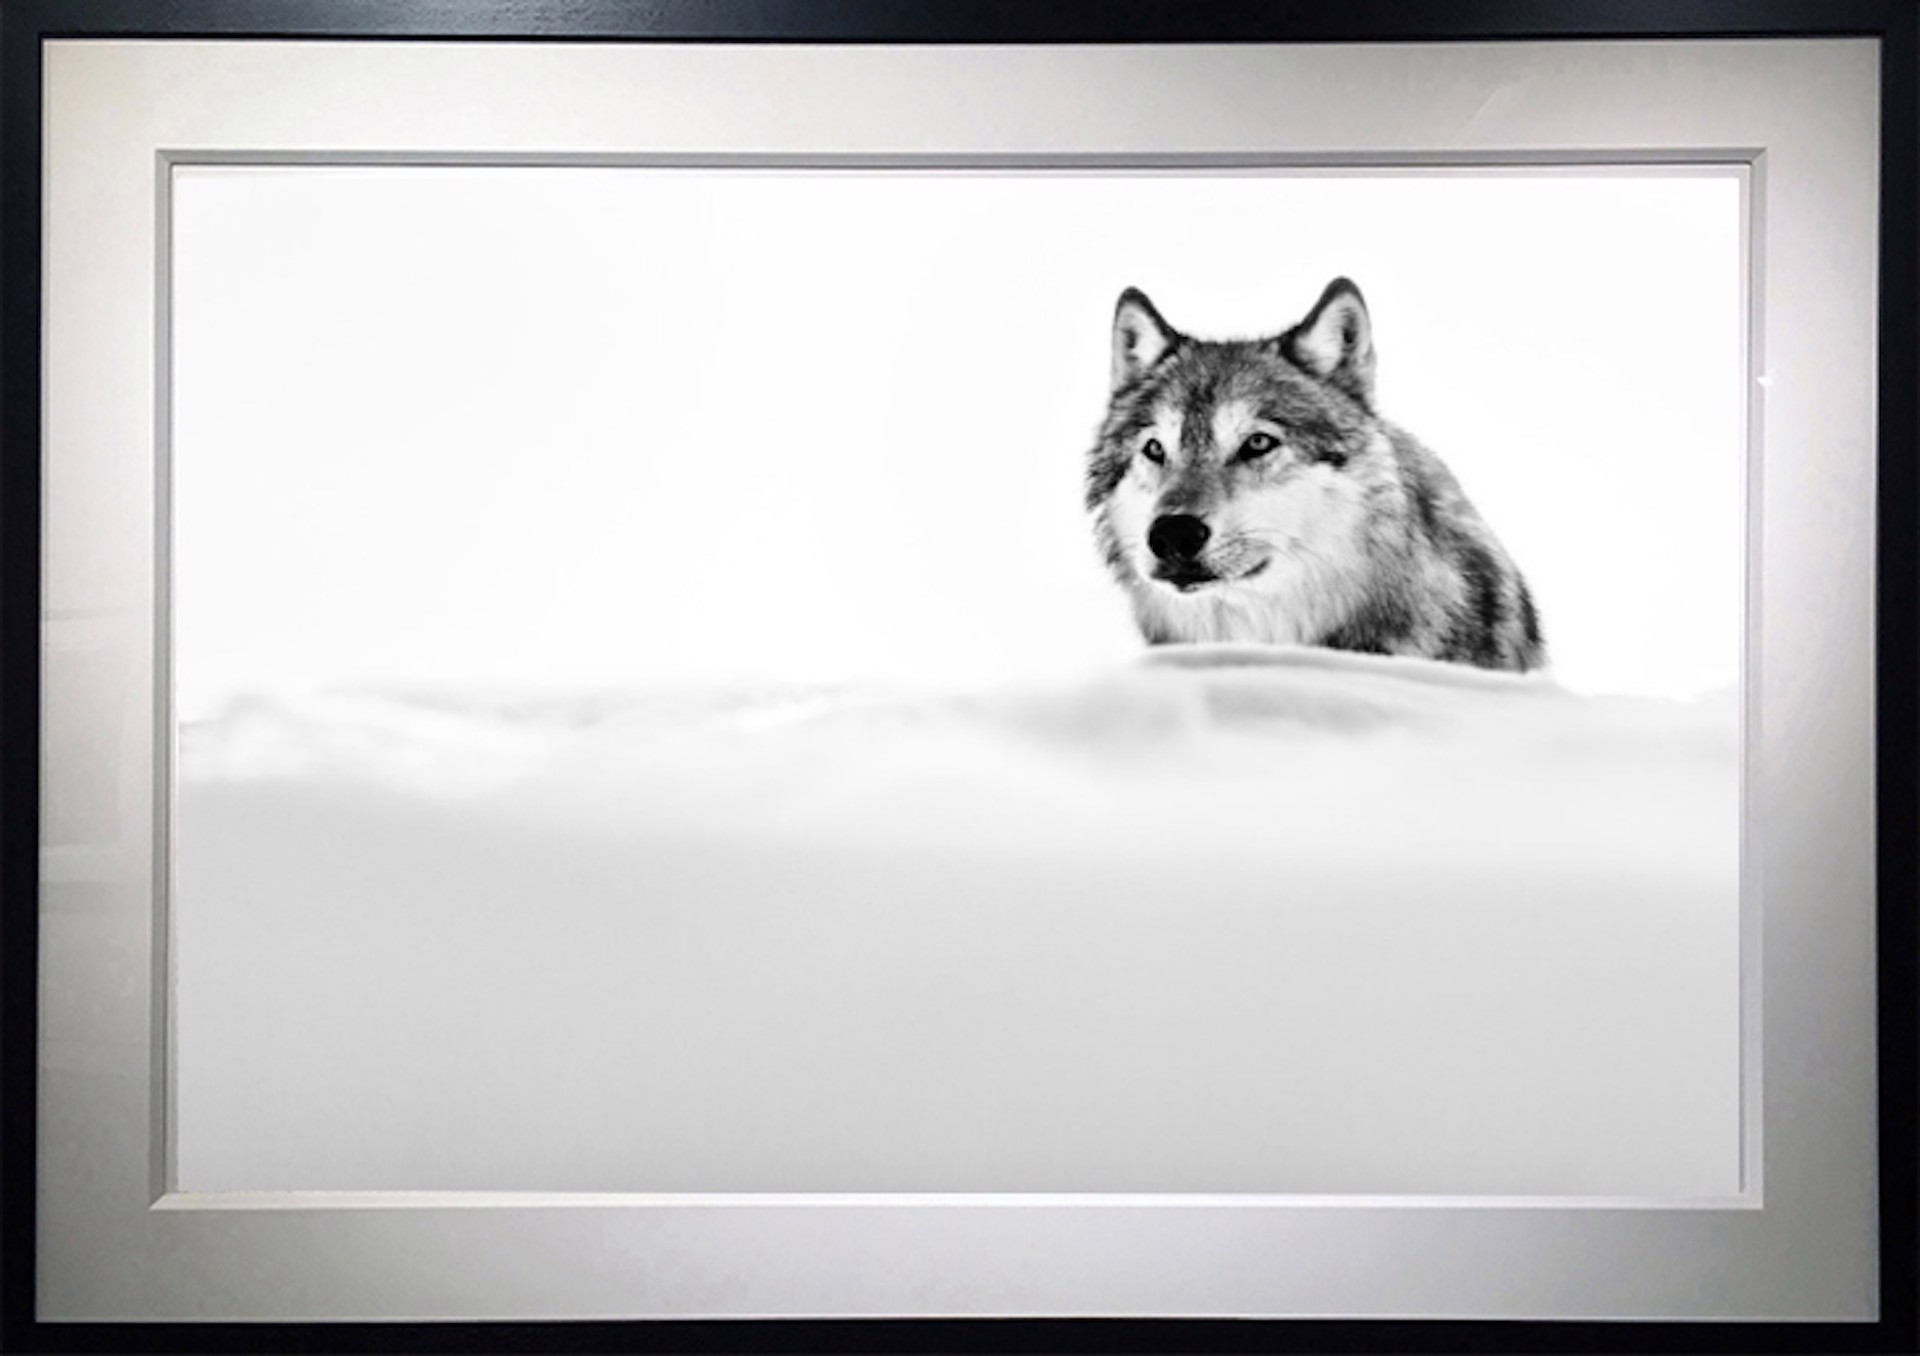 The Focused Wolf by David Yarrow